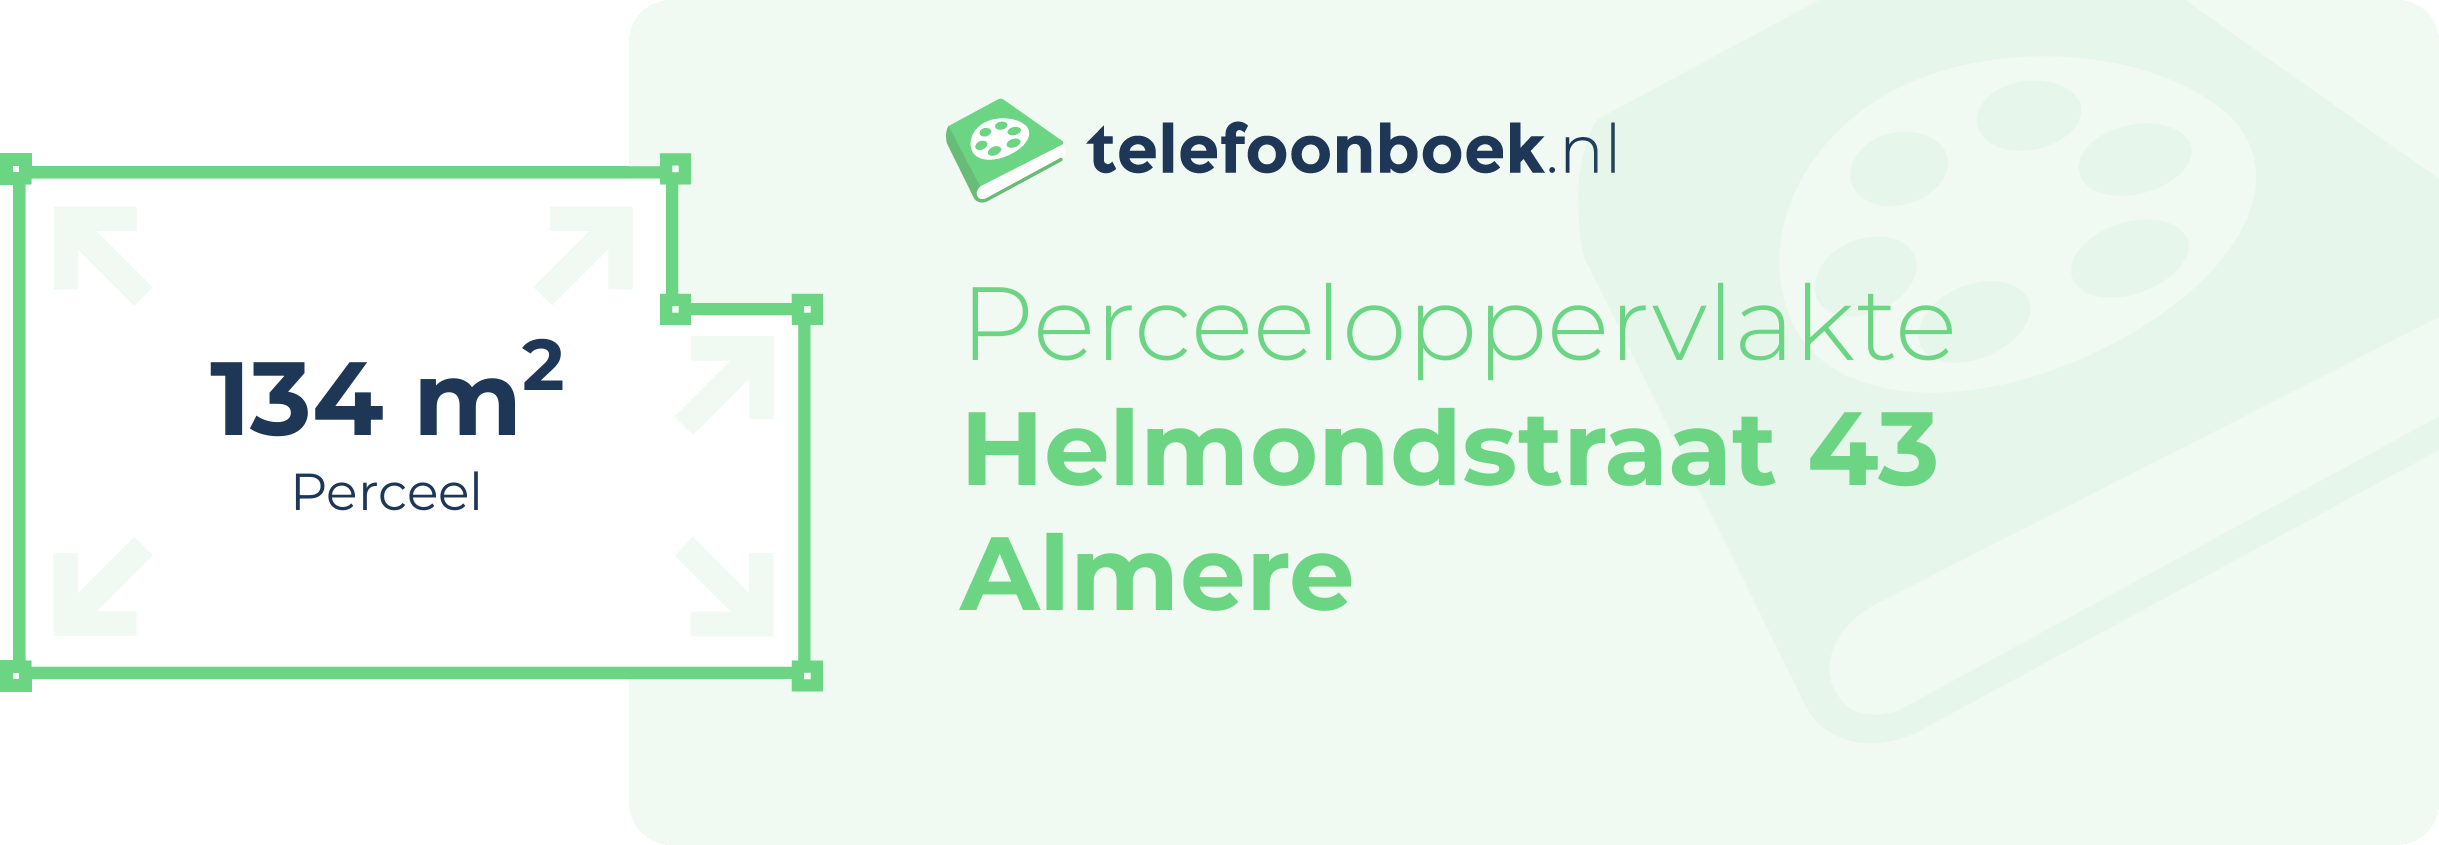 Perceeloppervlakte Helmondstraat 43 Almere